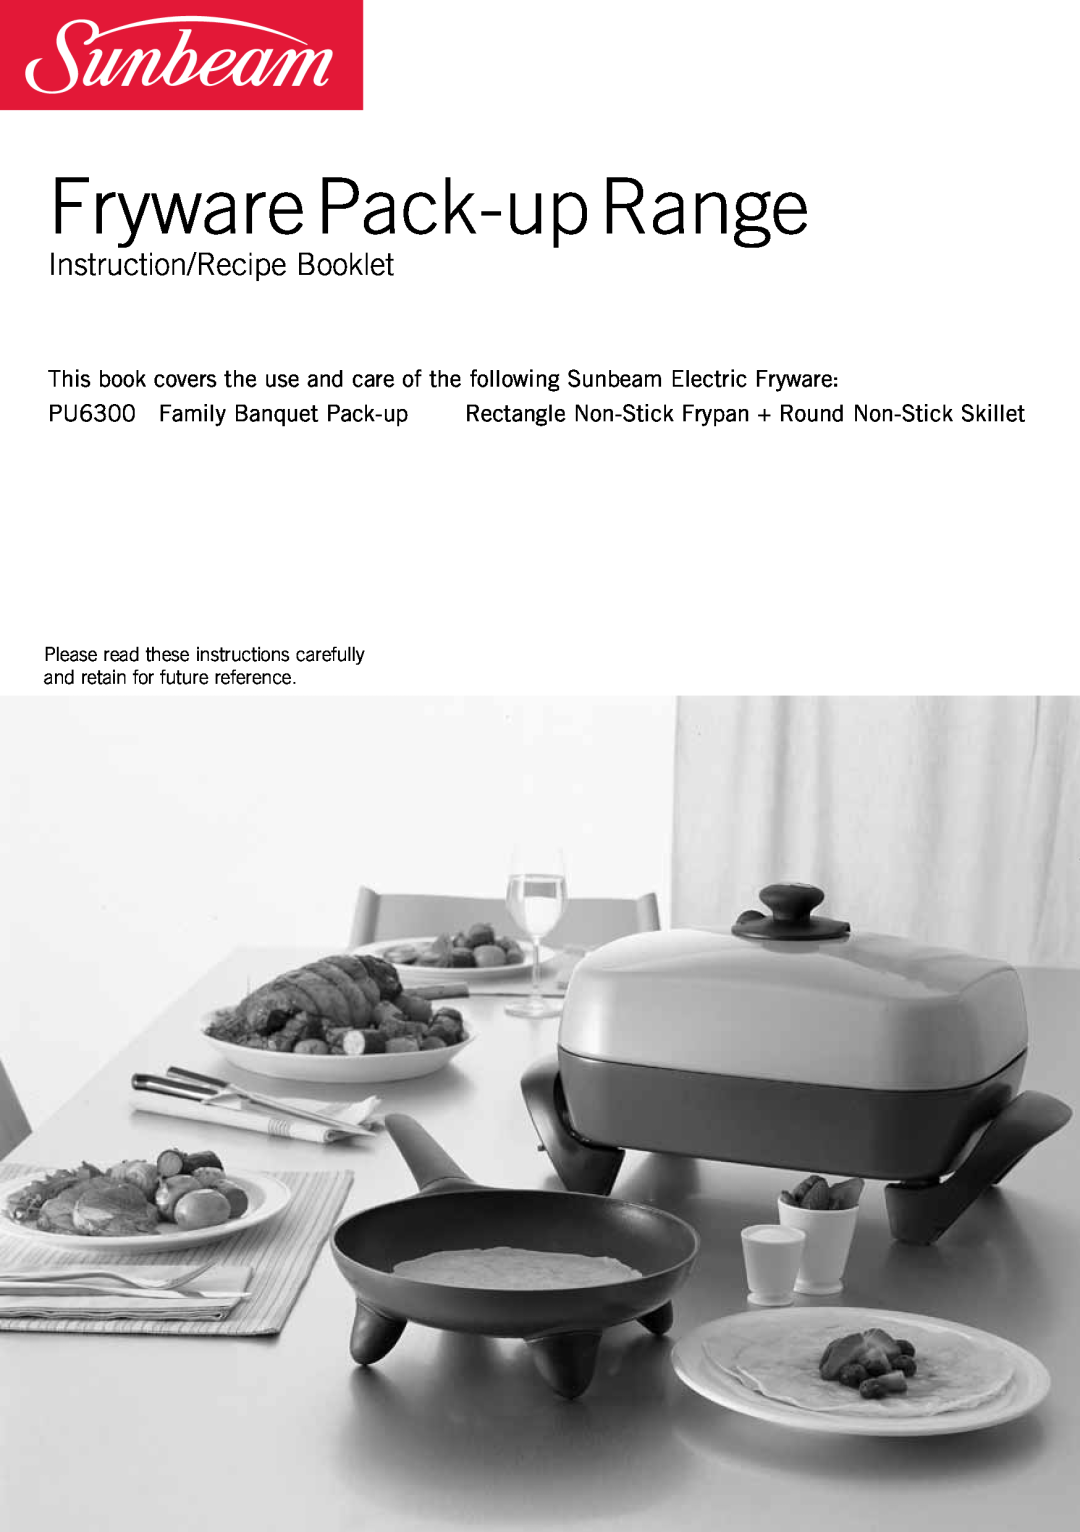 Sunbeam PU6300 manual Instruction/Recipe Booklet, Fryware Pack-up Range 